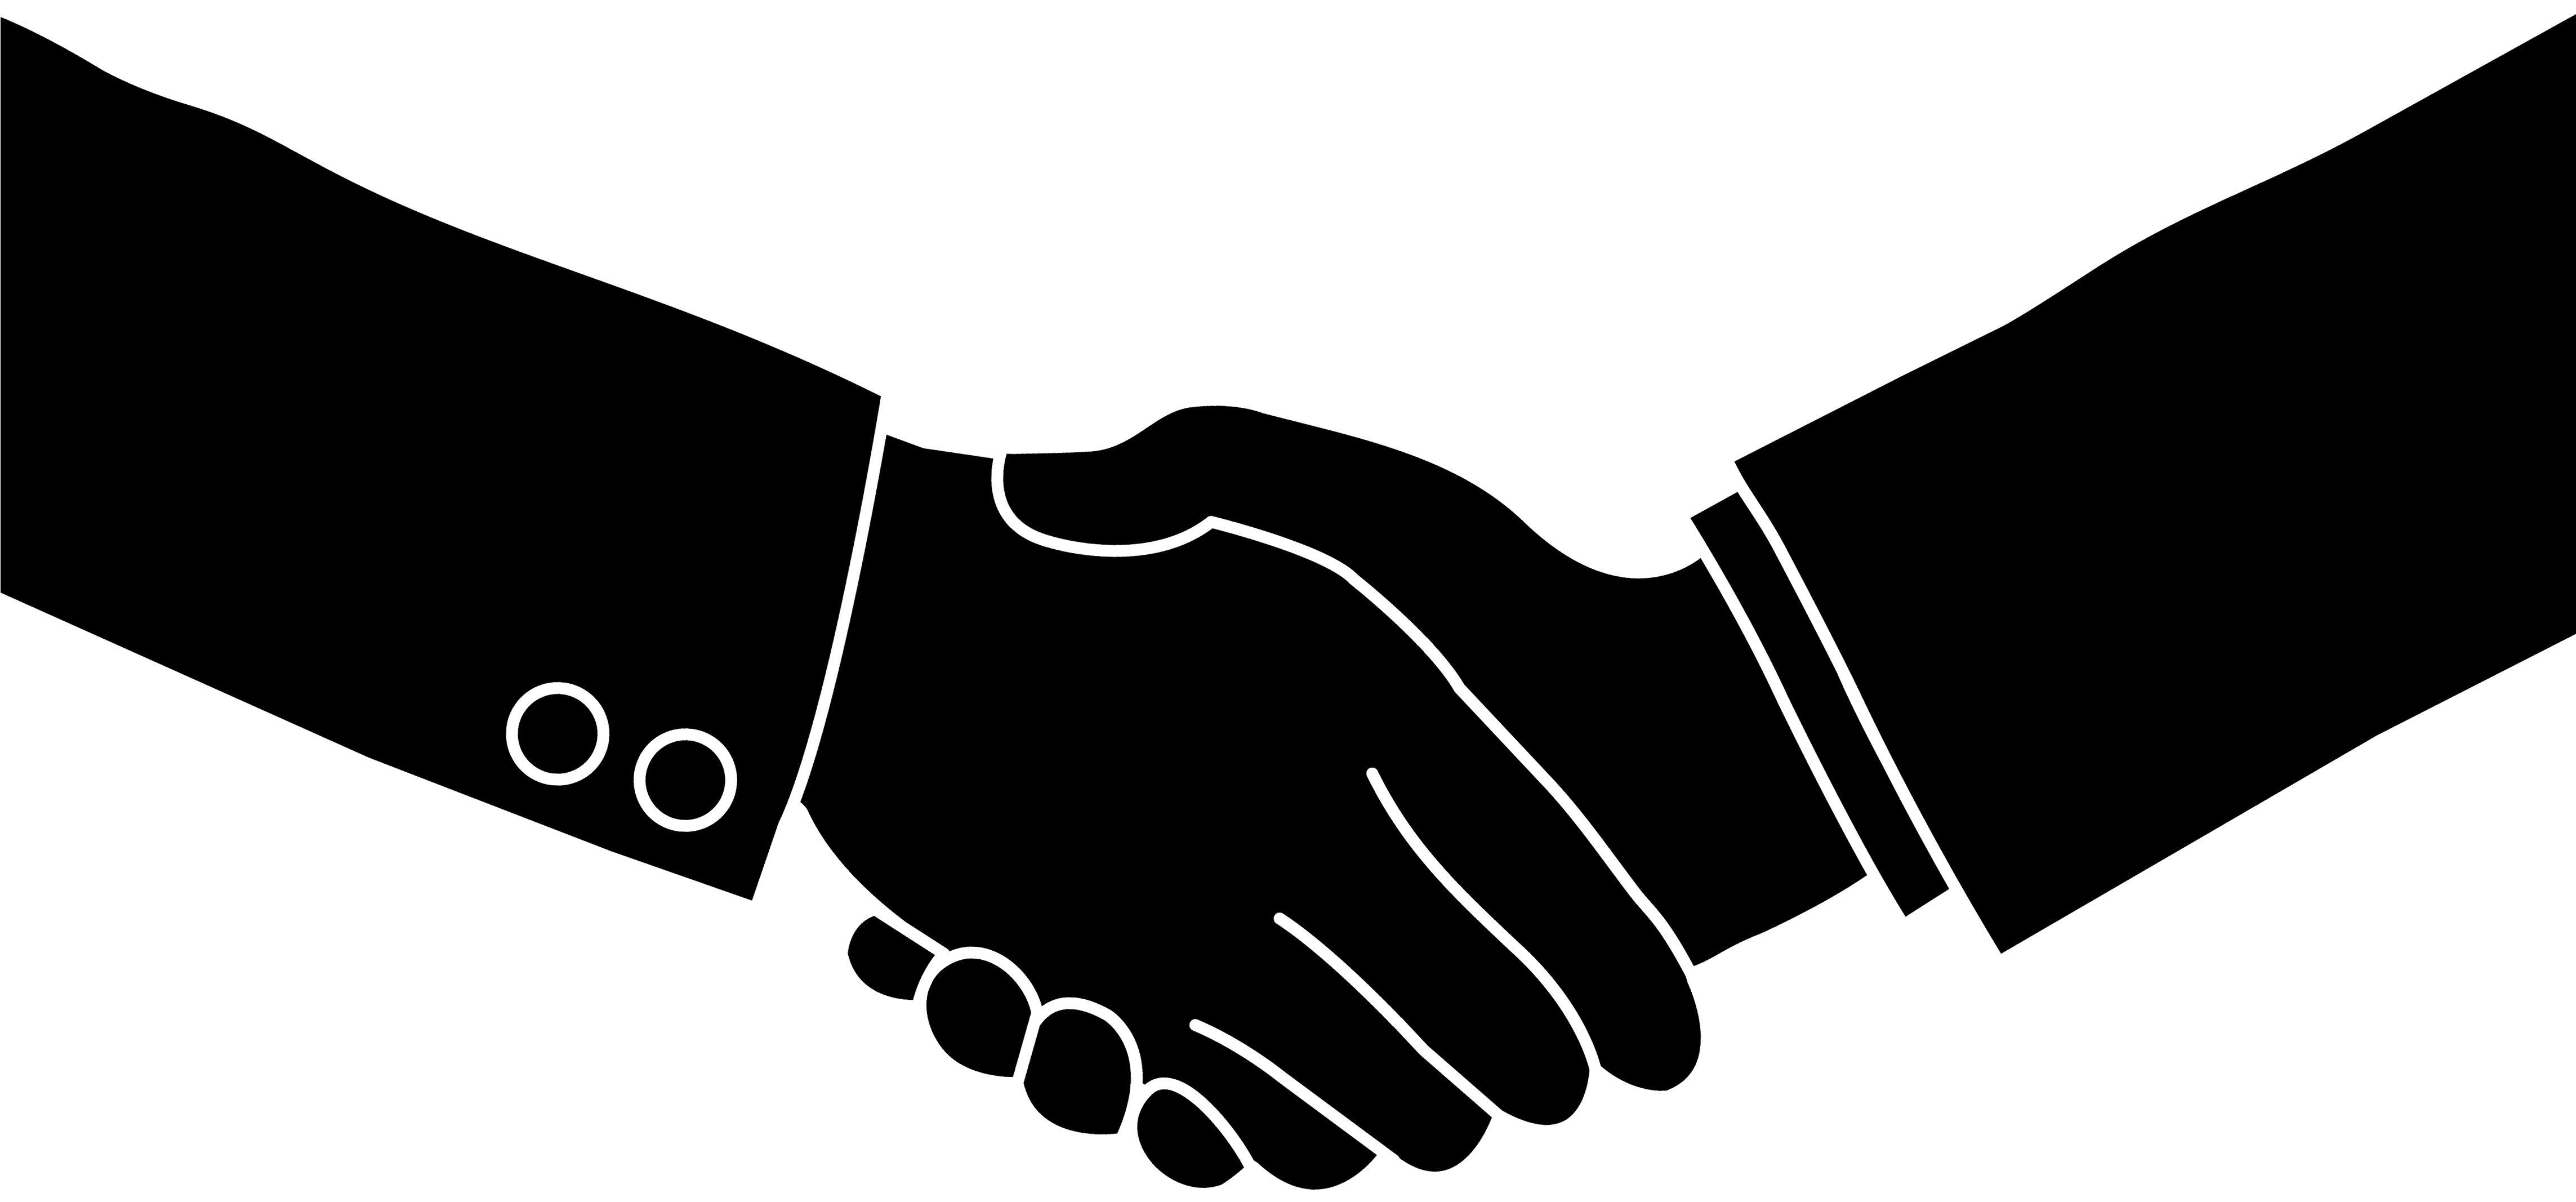 Handshake Agreement Vector PNG image